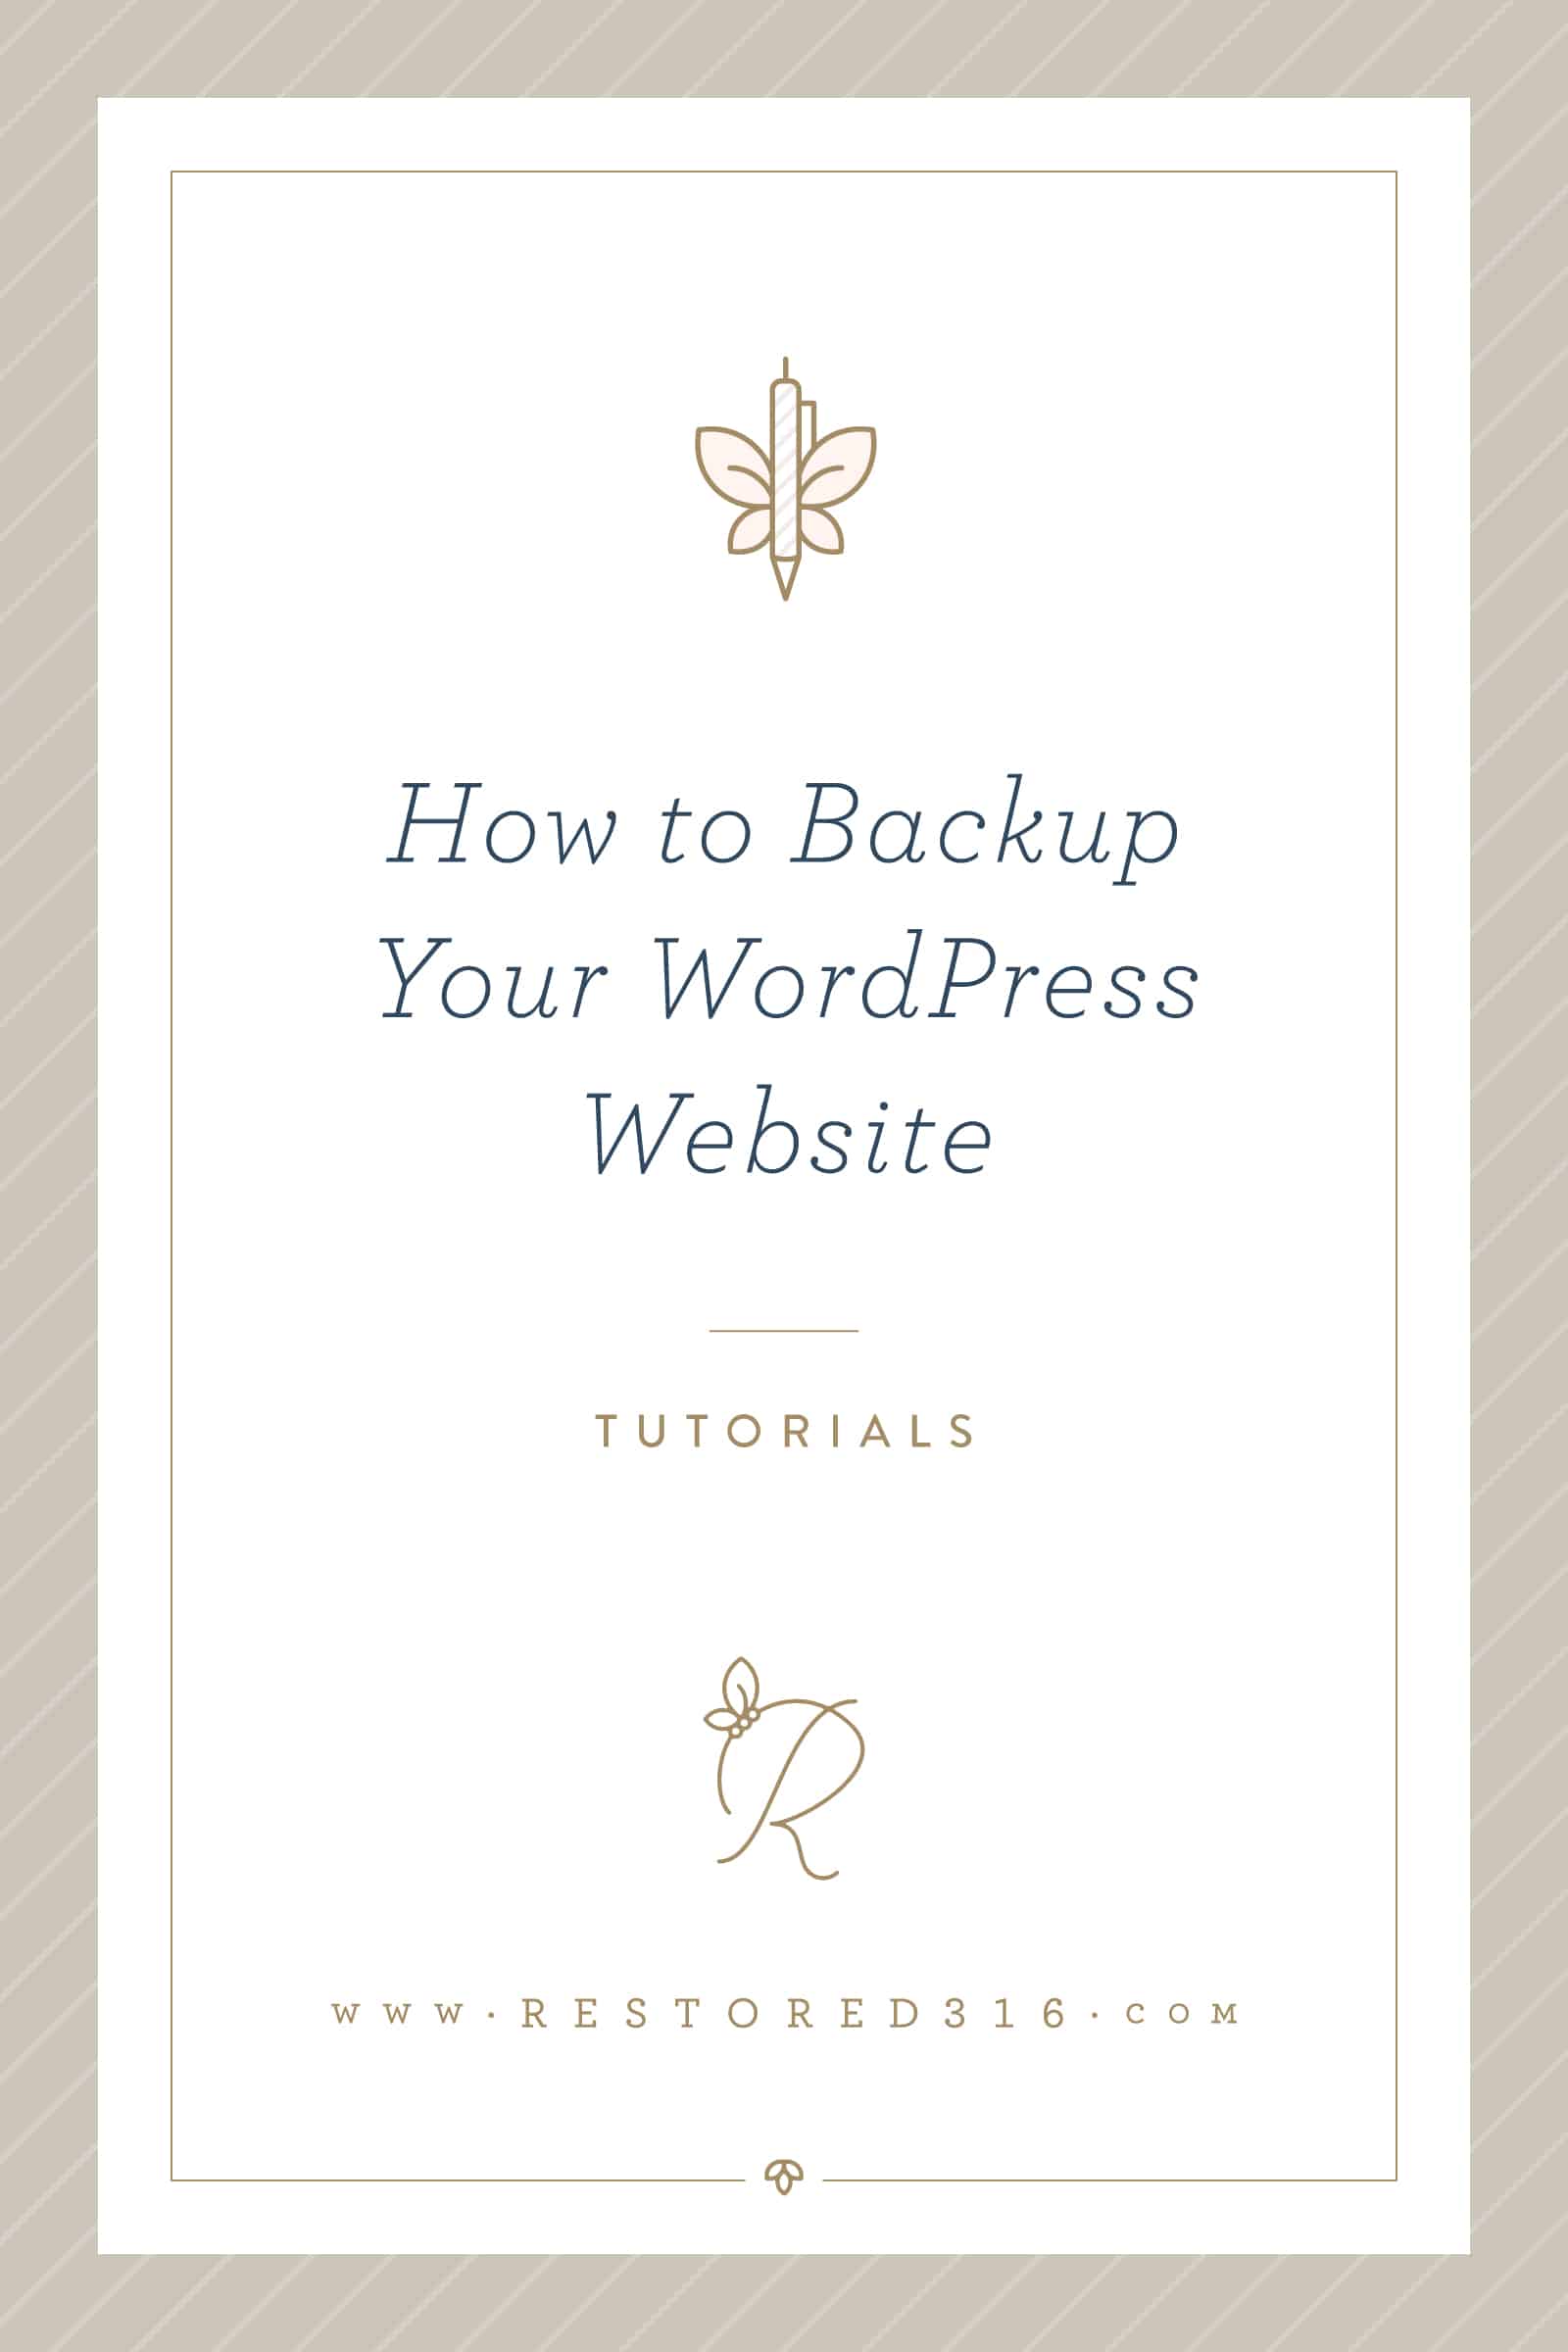 How to Backup your WordPress Website